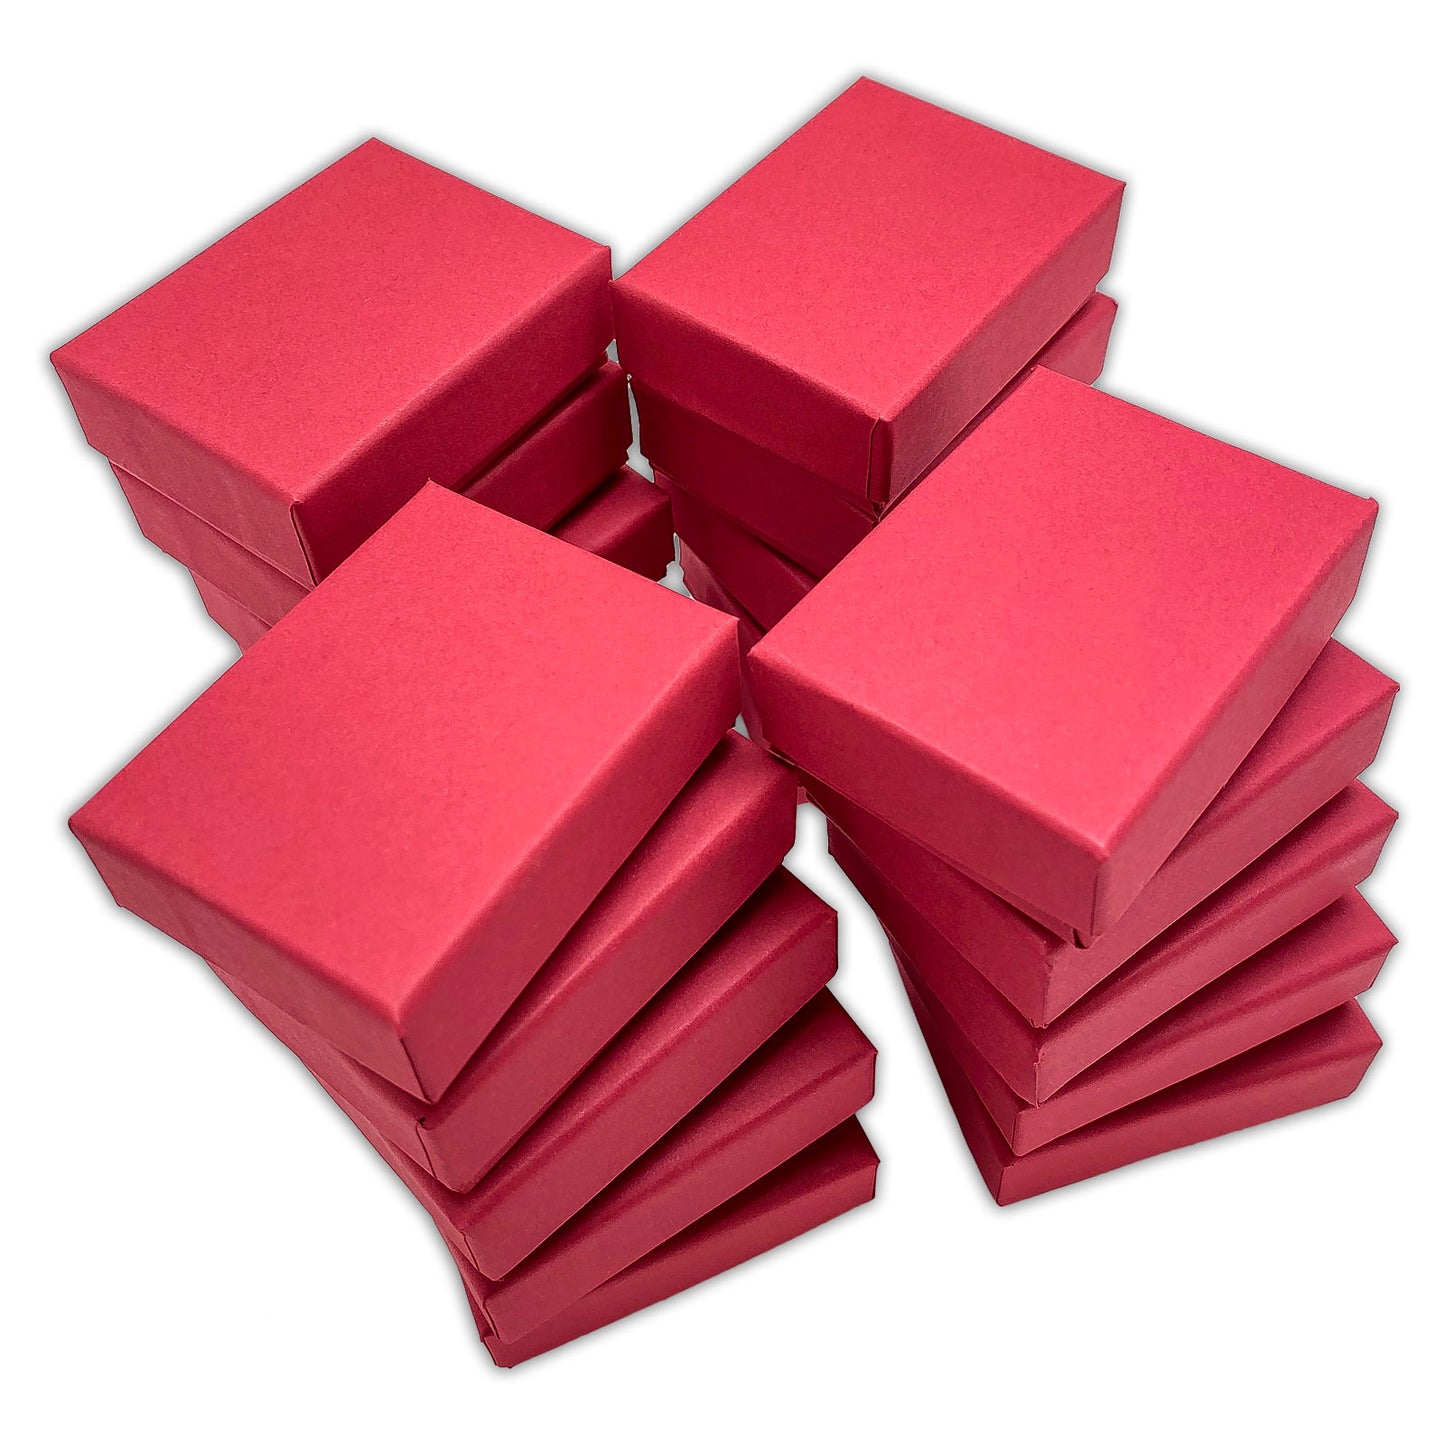 2 1/8" x 1 5/8" x 3/4" Matte Red Cotton Filled Paper Box